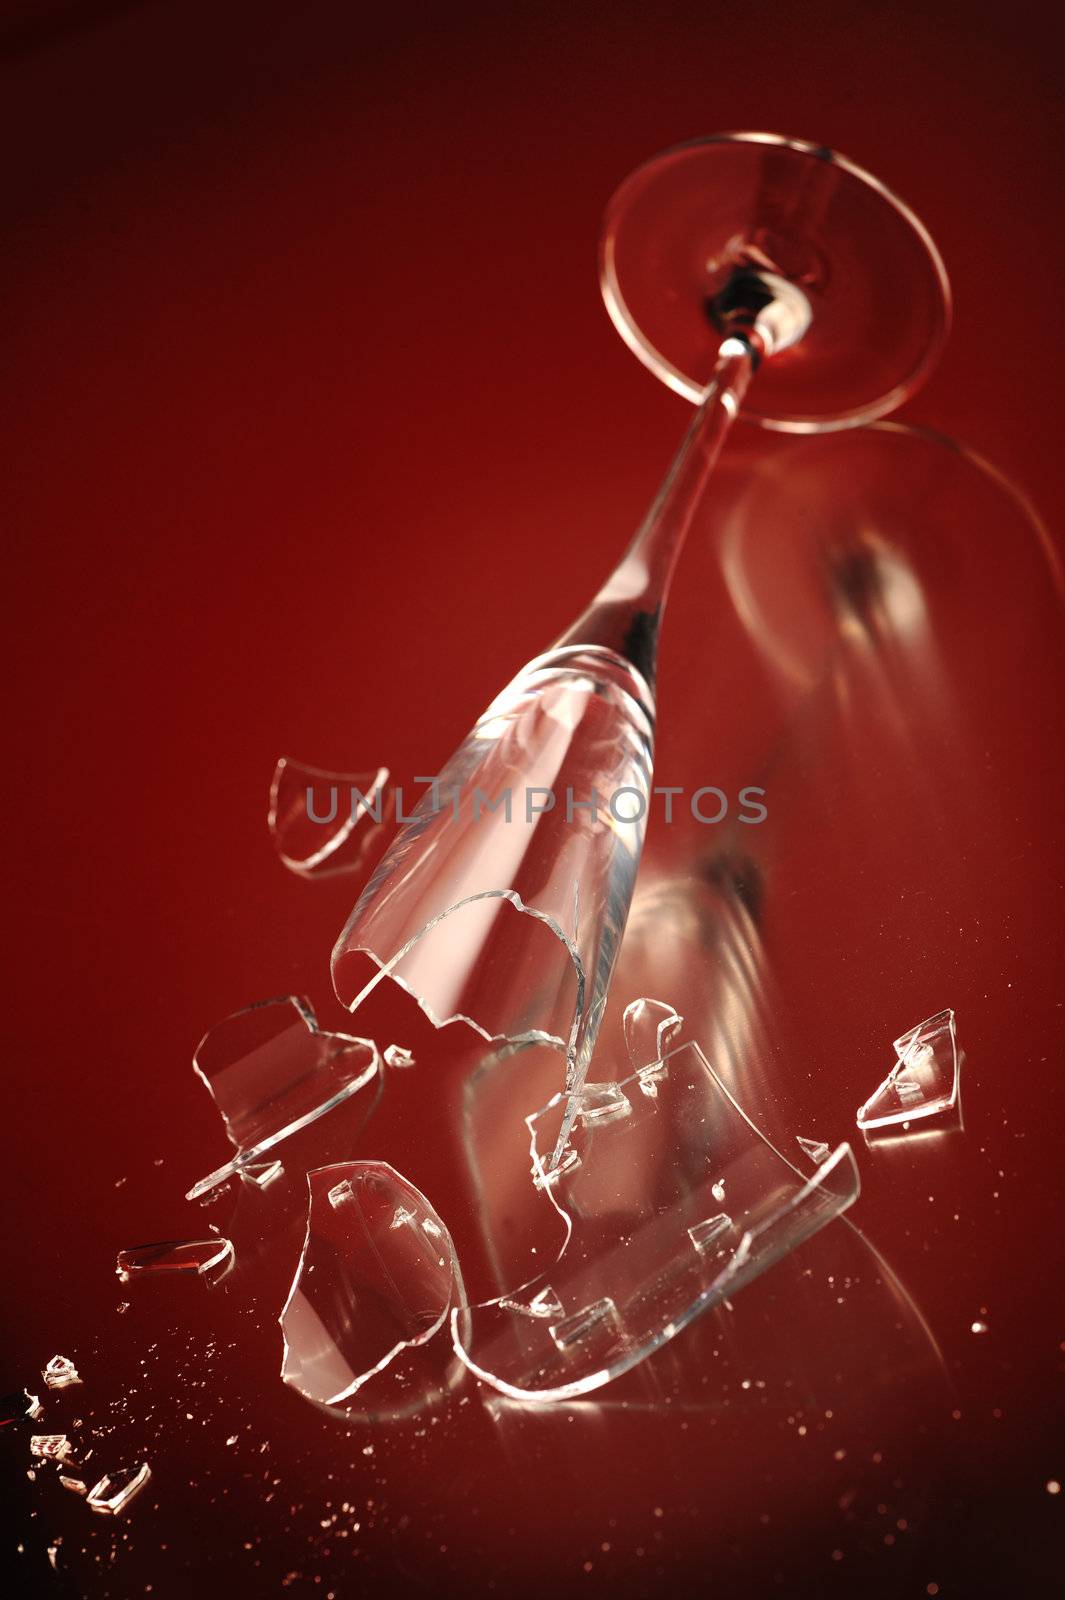 elegant wine glass broken on a red background